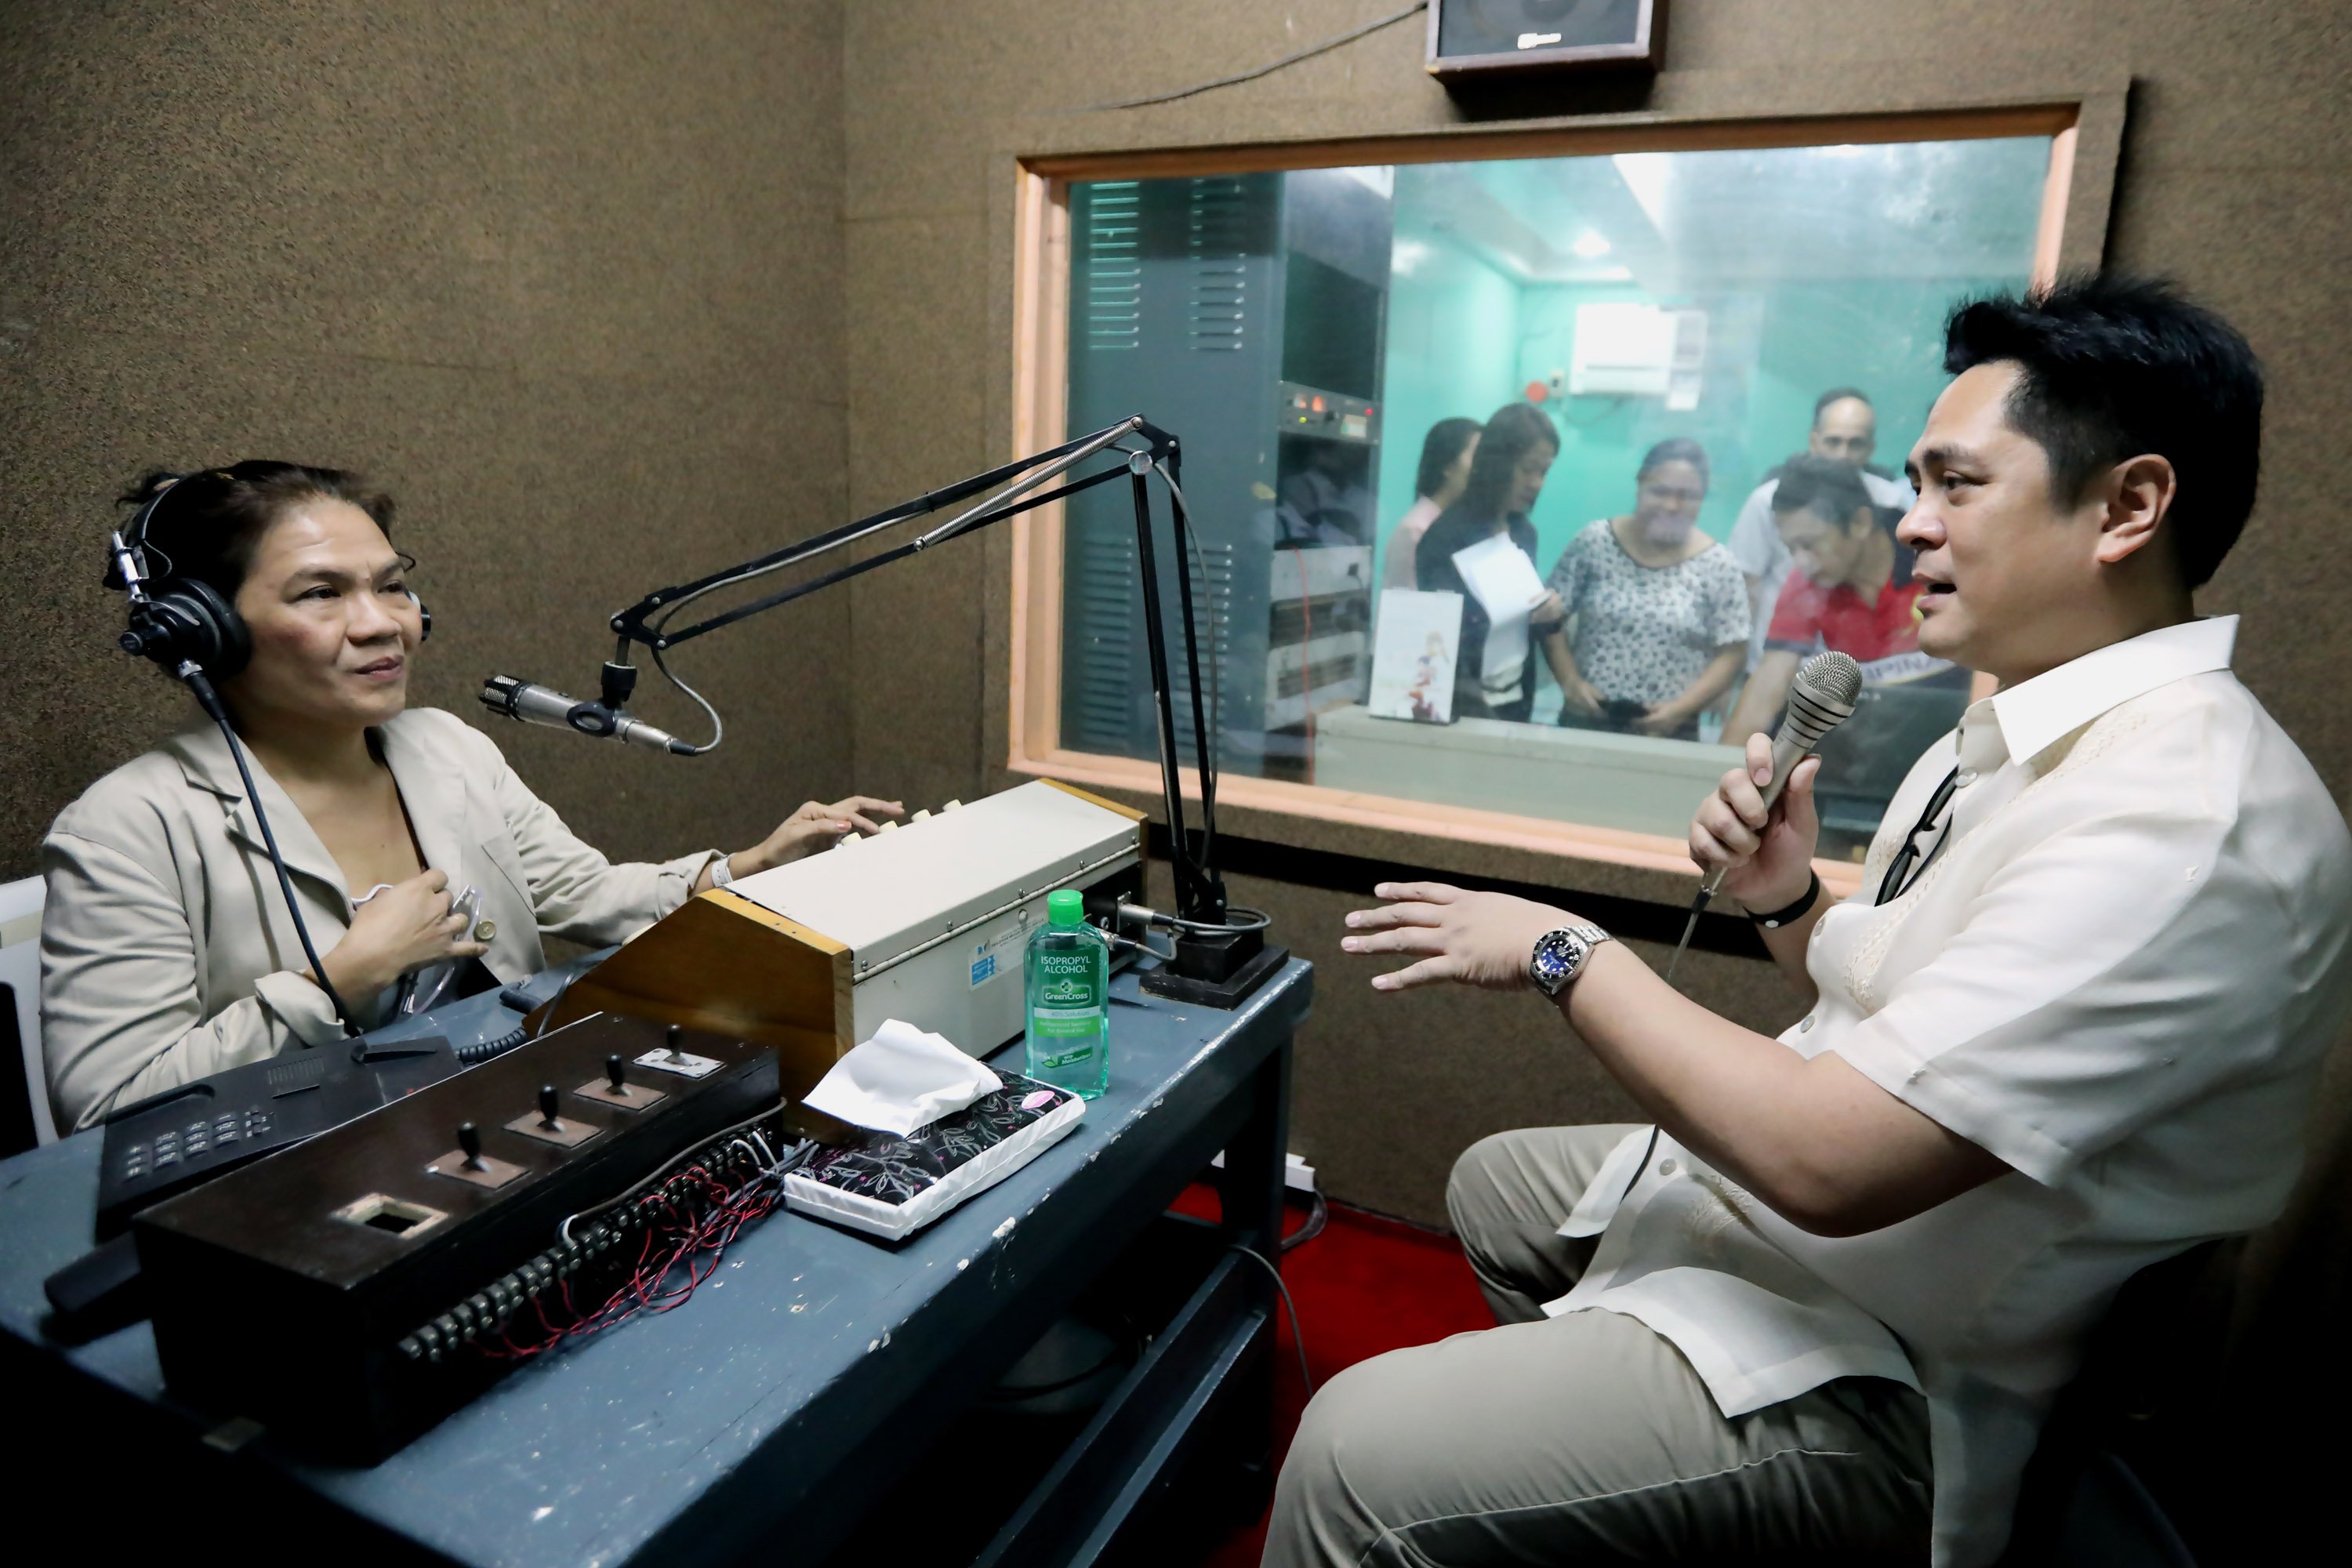 PCOO Sec. visits Radyo Pilipinas, Legaspi City